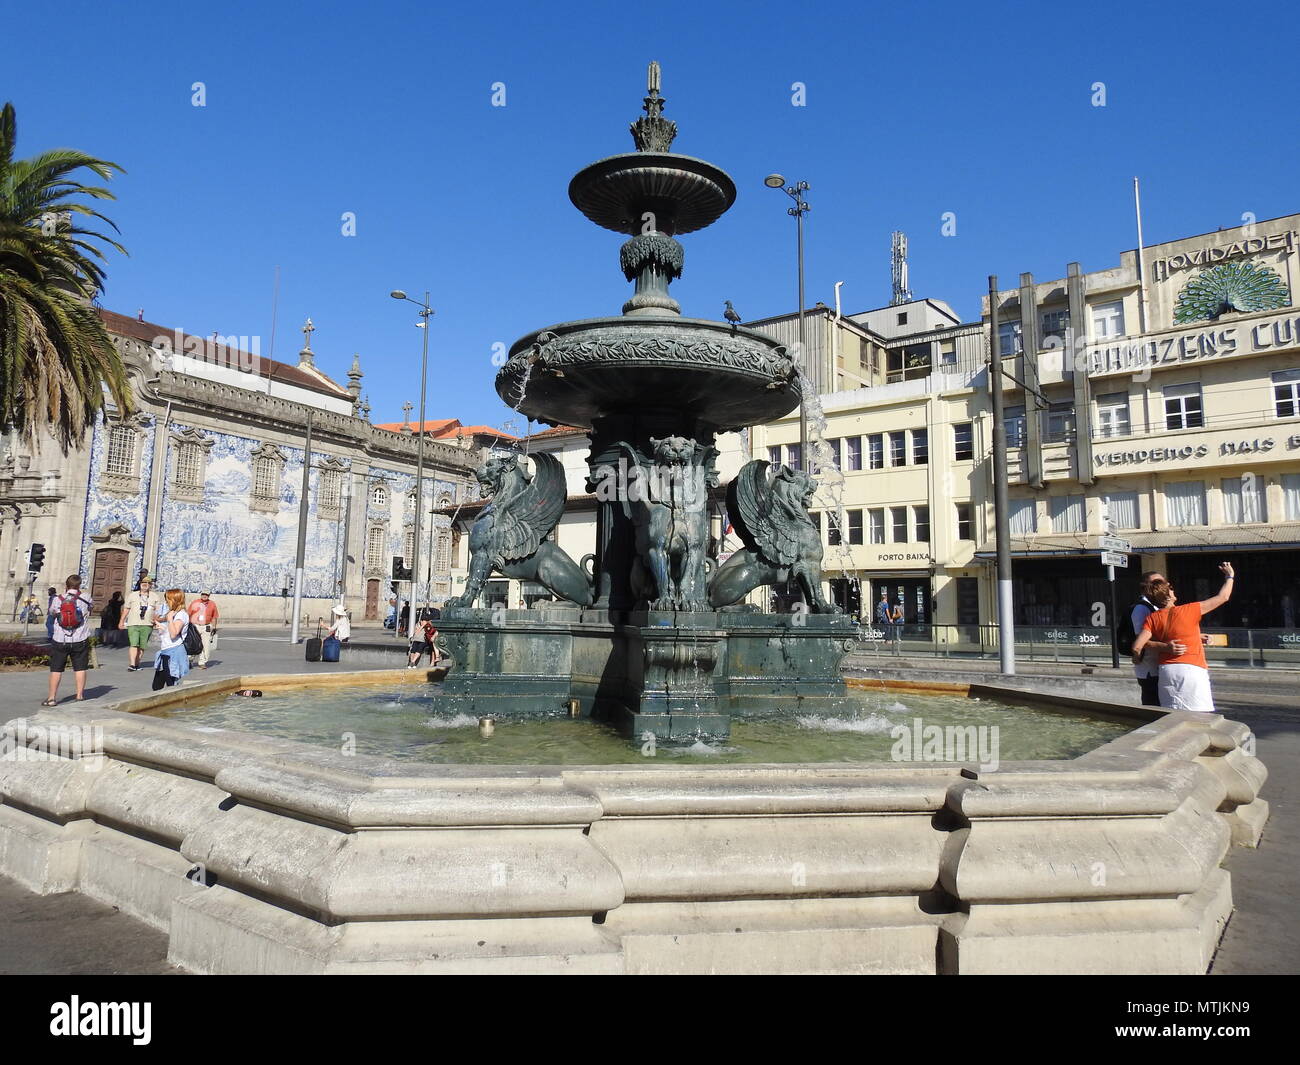 Fonte dos Leoes (Lions Fountain). Porto. Portugal. Stock Photo